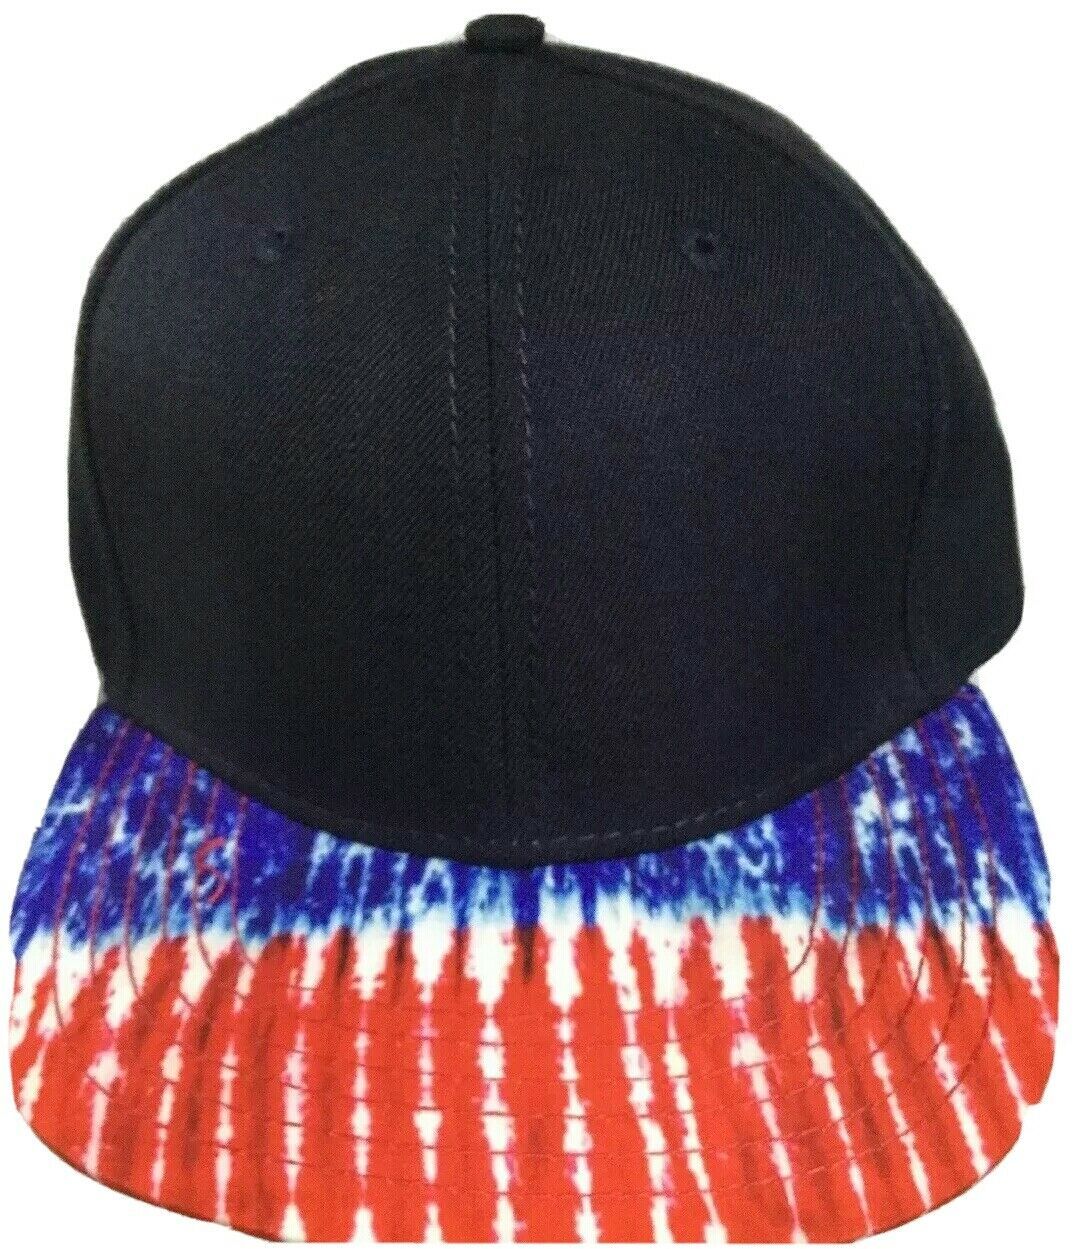 Unbranded - Americana tie dyed printed visor skater baseball hat cap - american red white